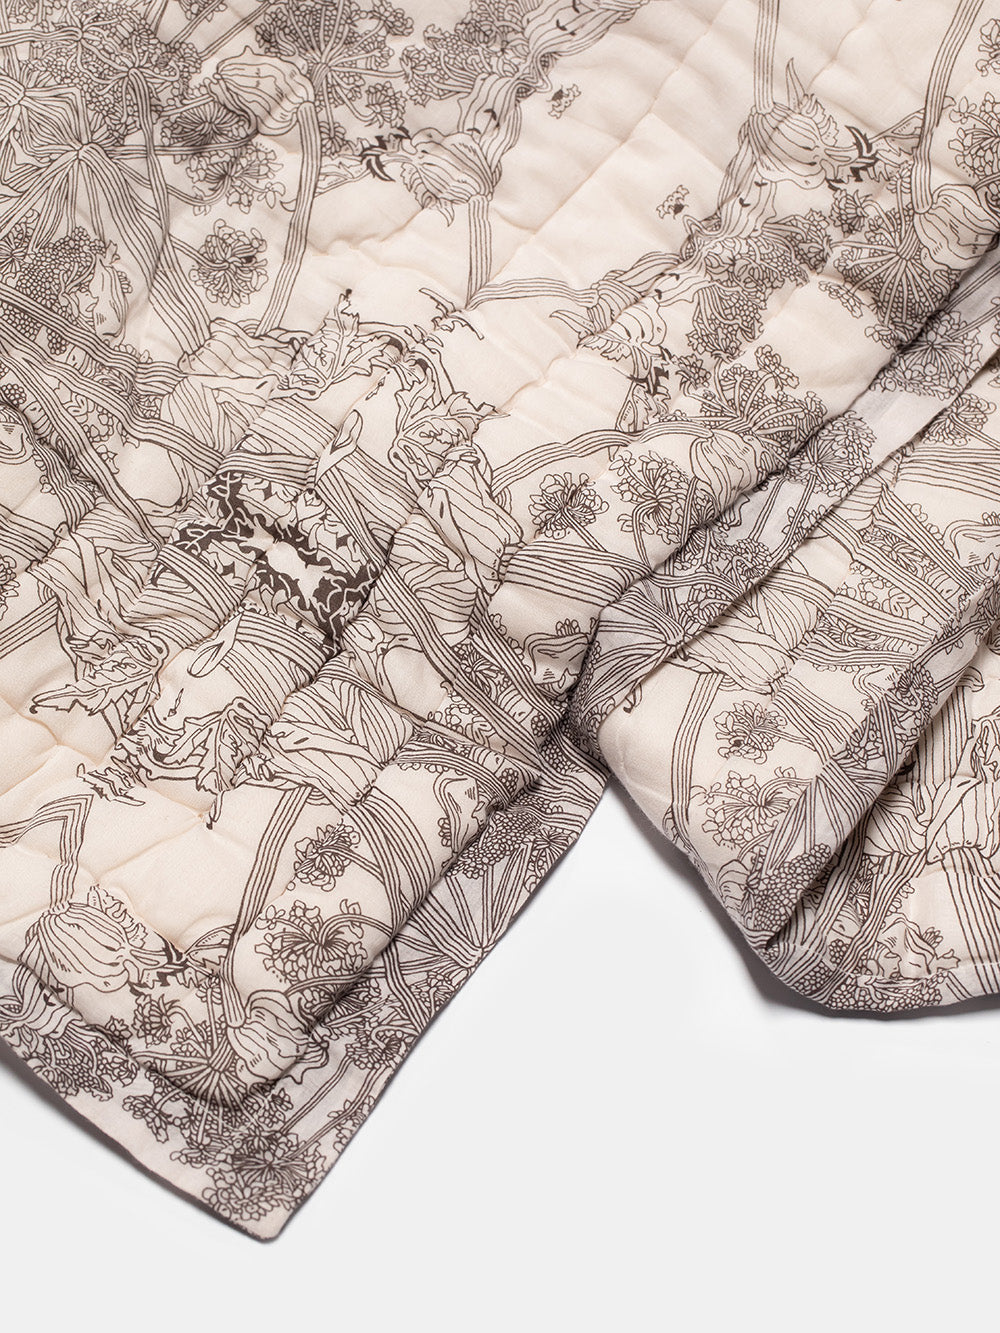 Cotton Hand-stitched Quilt in Dove and Dark Chocolate Botanicus